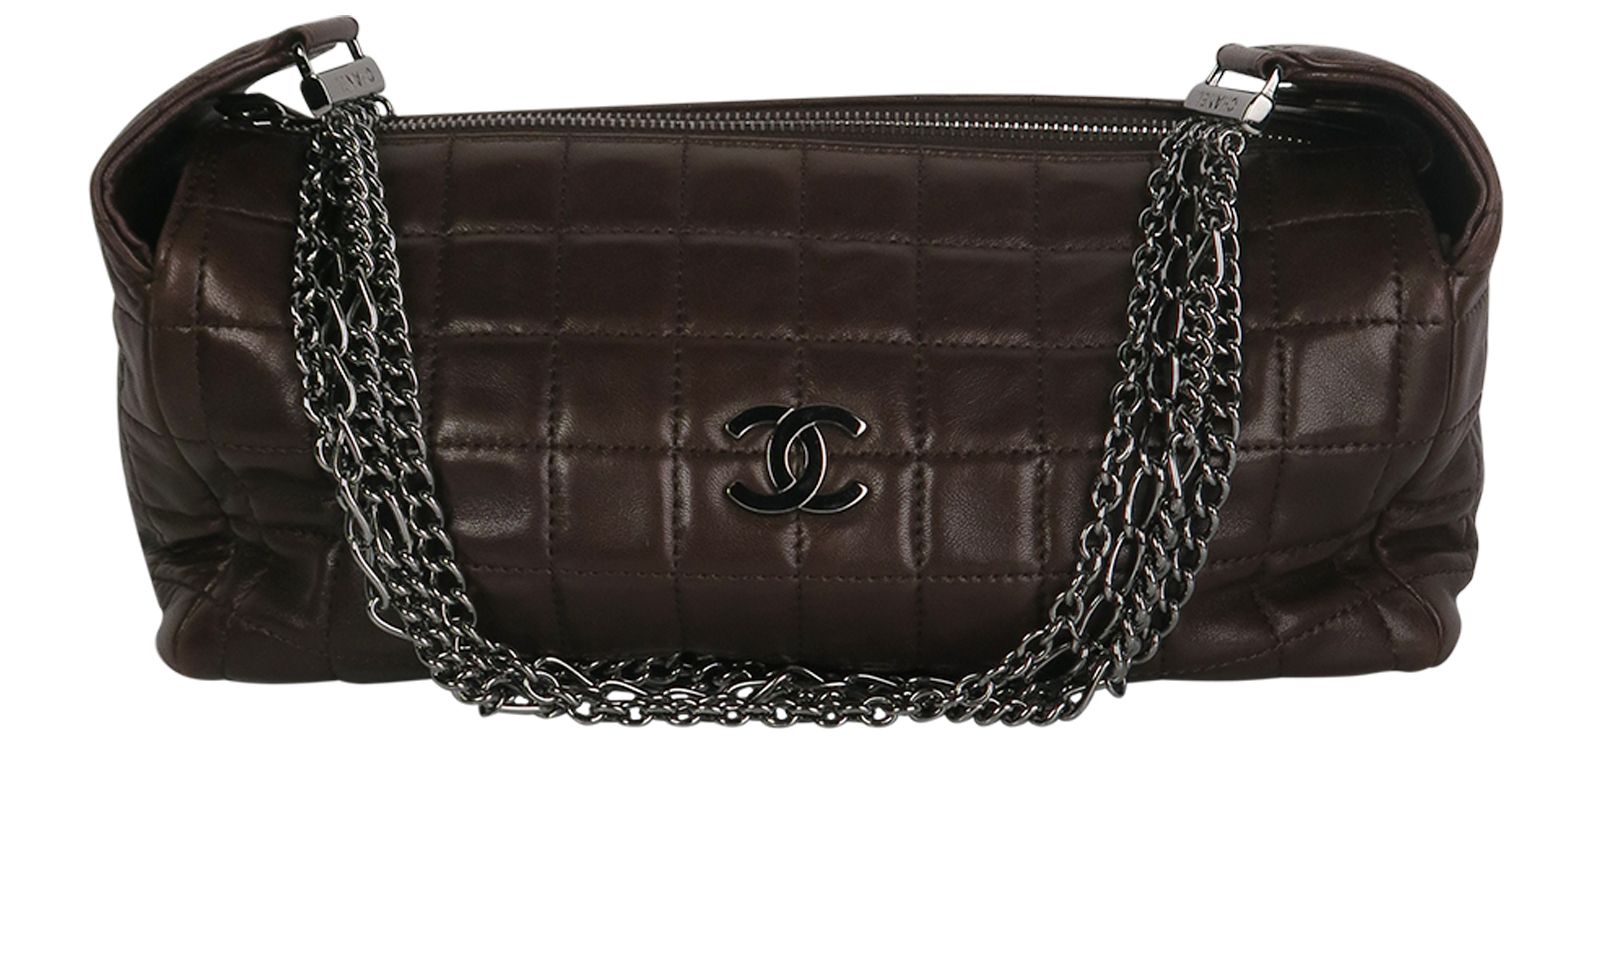 Chanel Lambskin Chocolate Bar Multichain Flap Bag